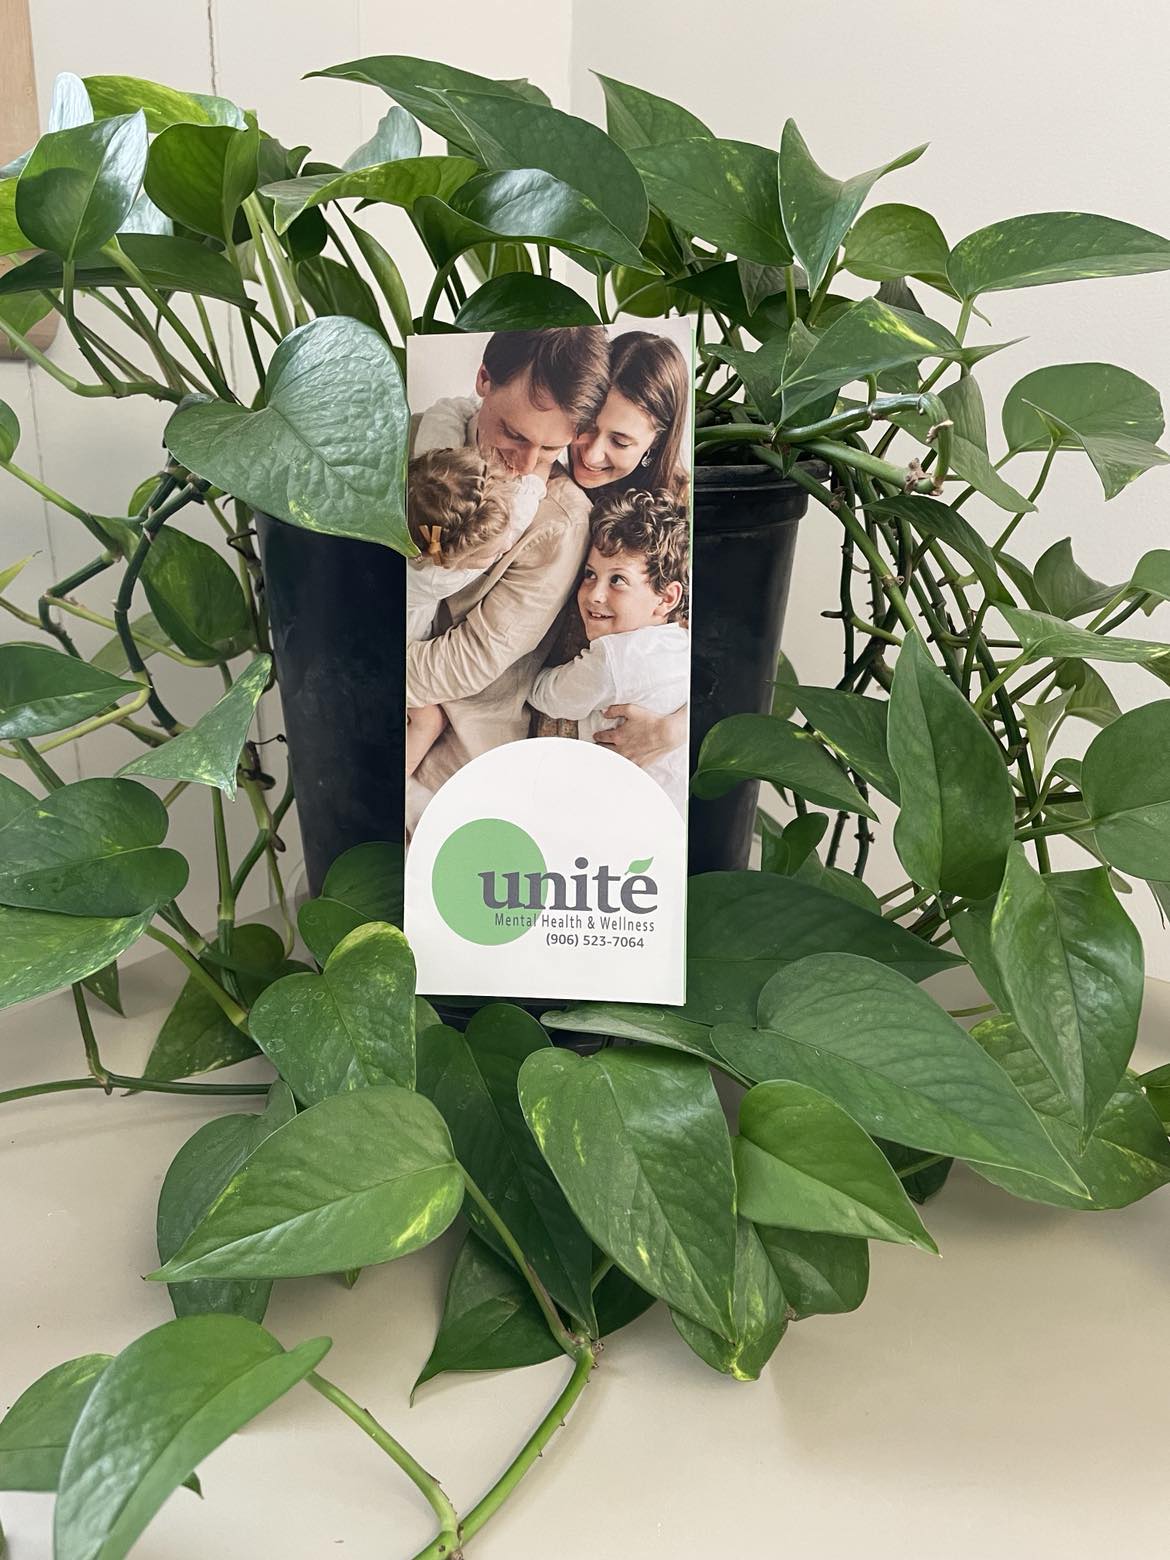 Unite brochure in front of plant on desktop.